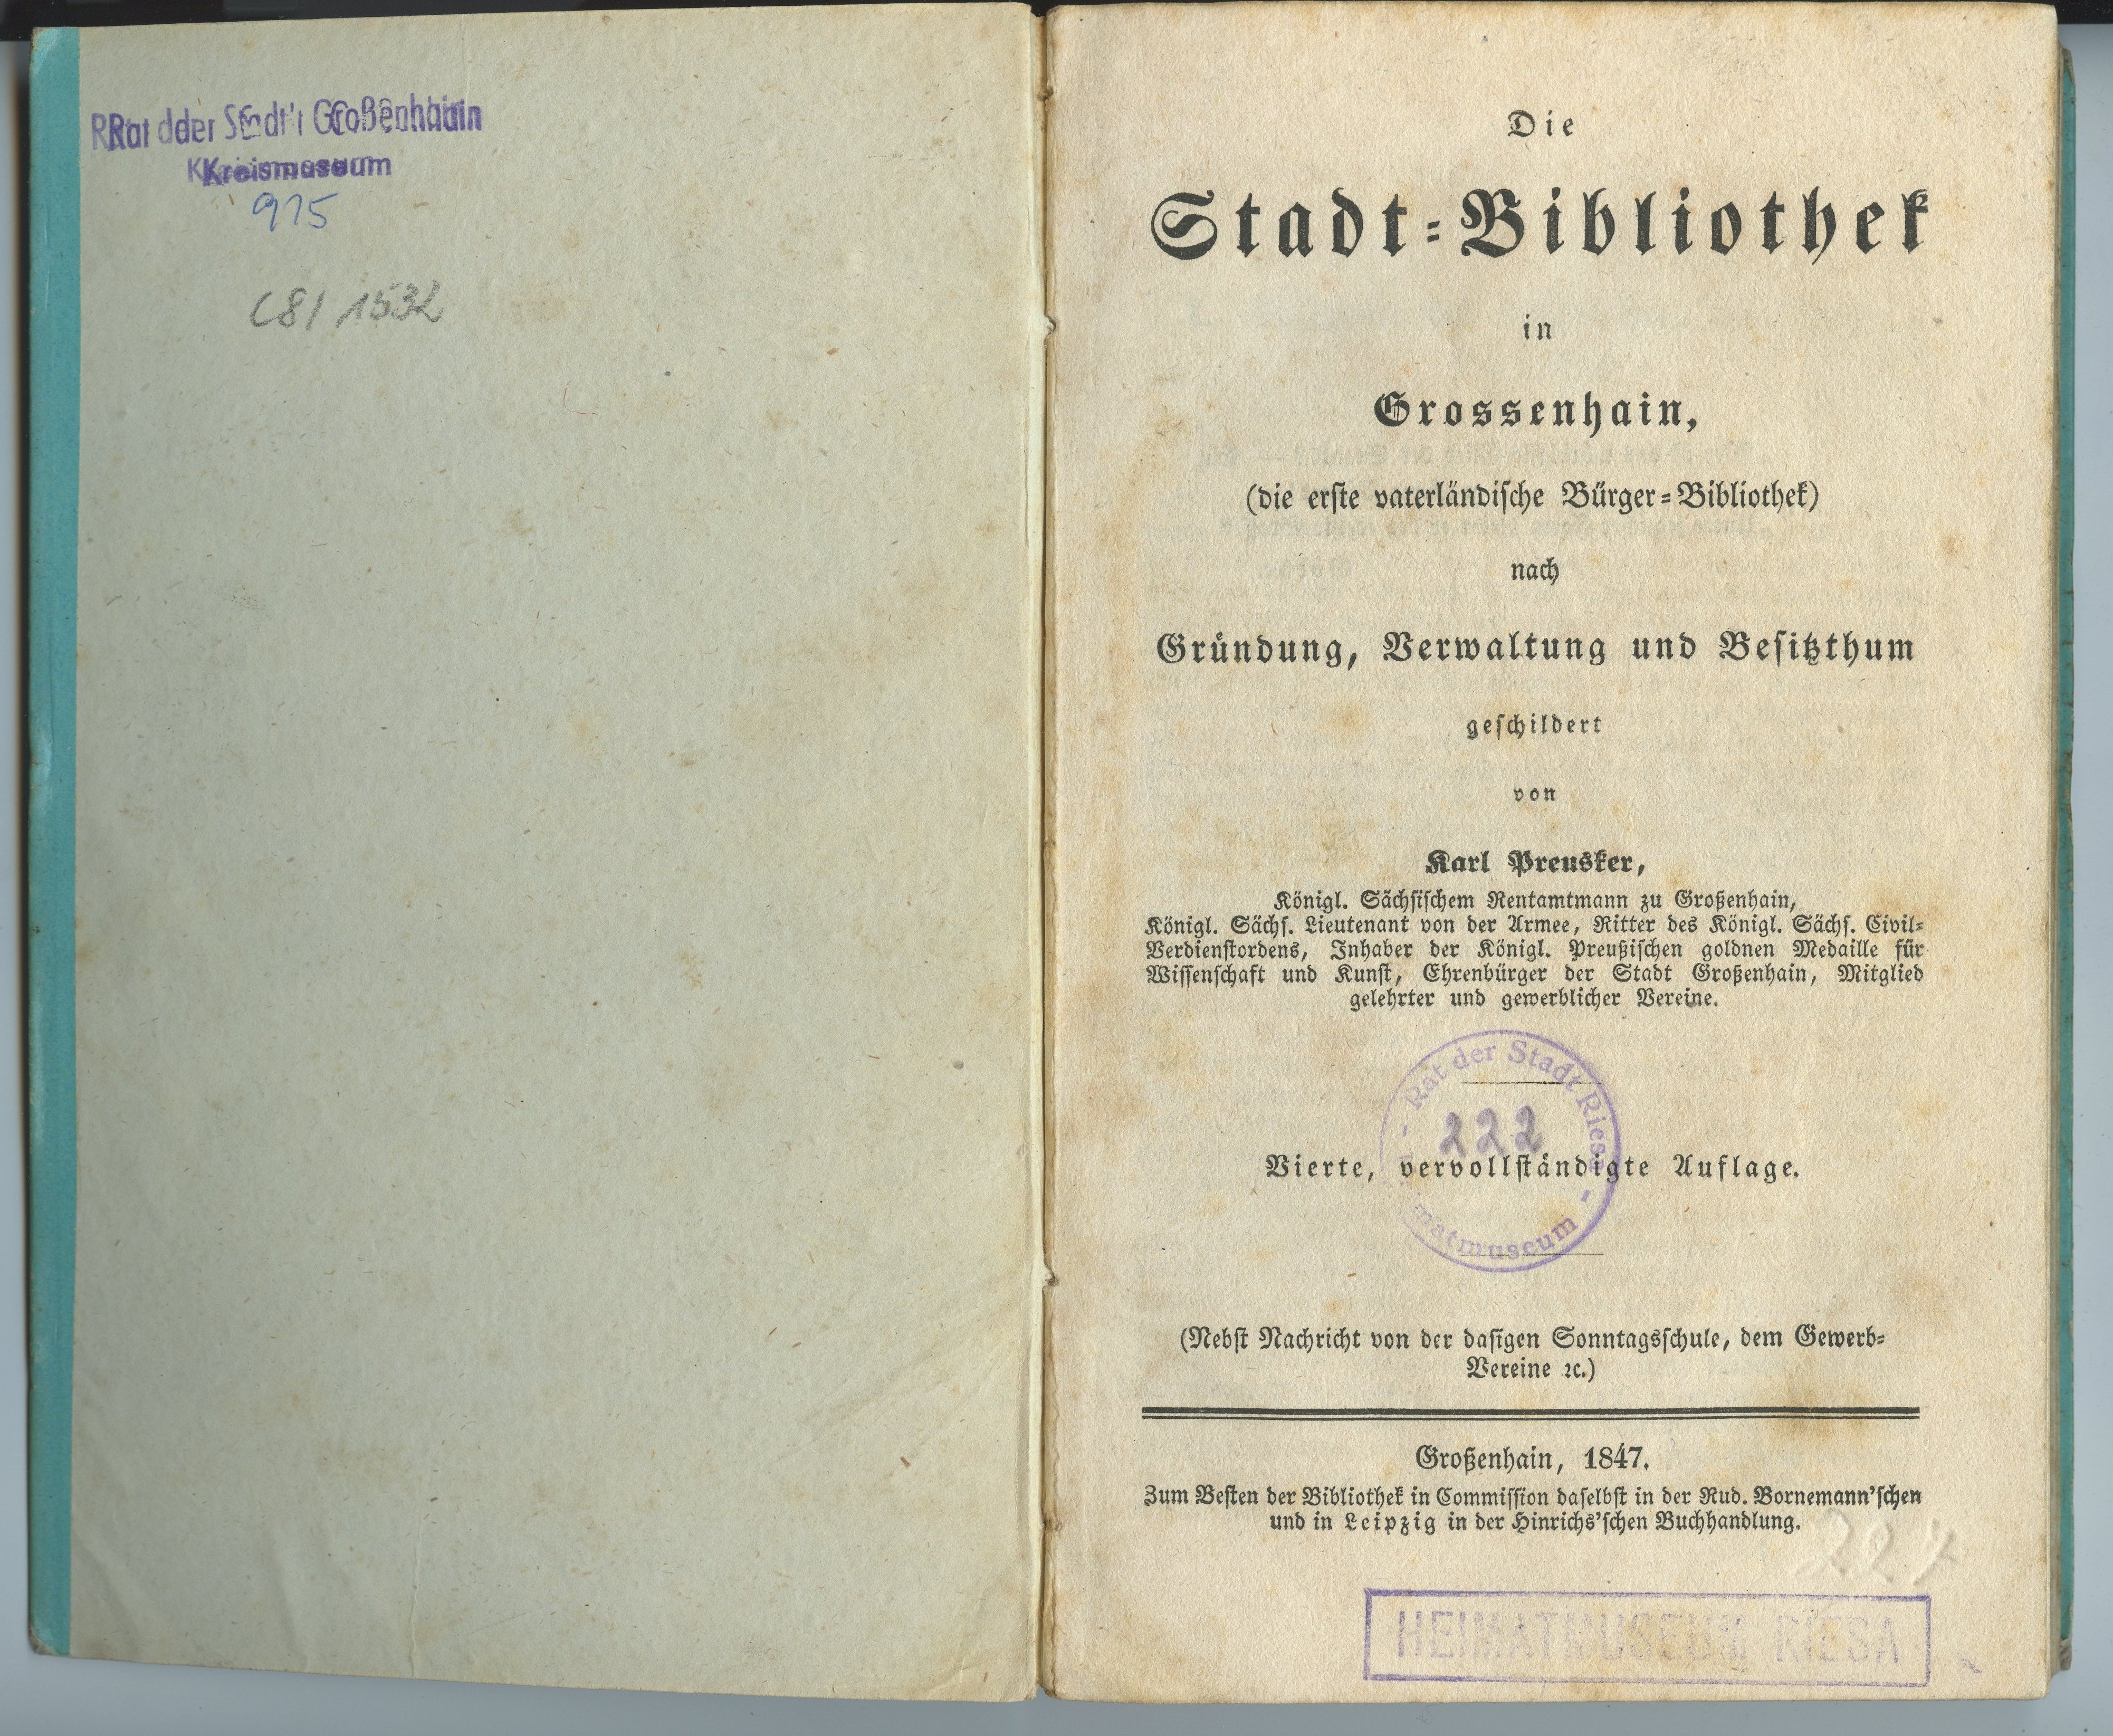 Preusker, Karl: Die Stadt-Bibliothek in Grossenhain [...], 4. Auflage 1847 (Museum Alte Lateinschule CC BY-NC-SA)